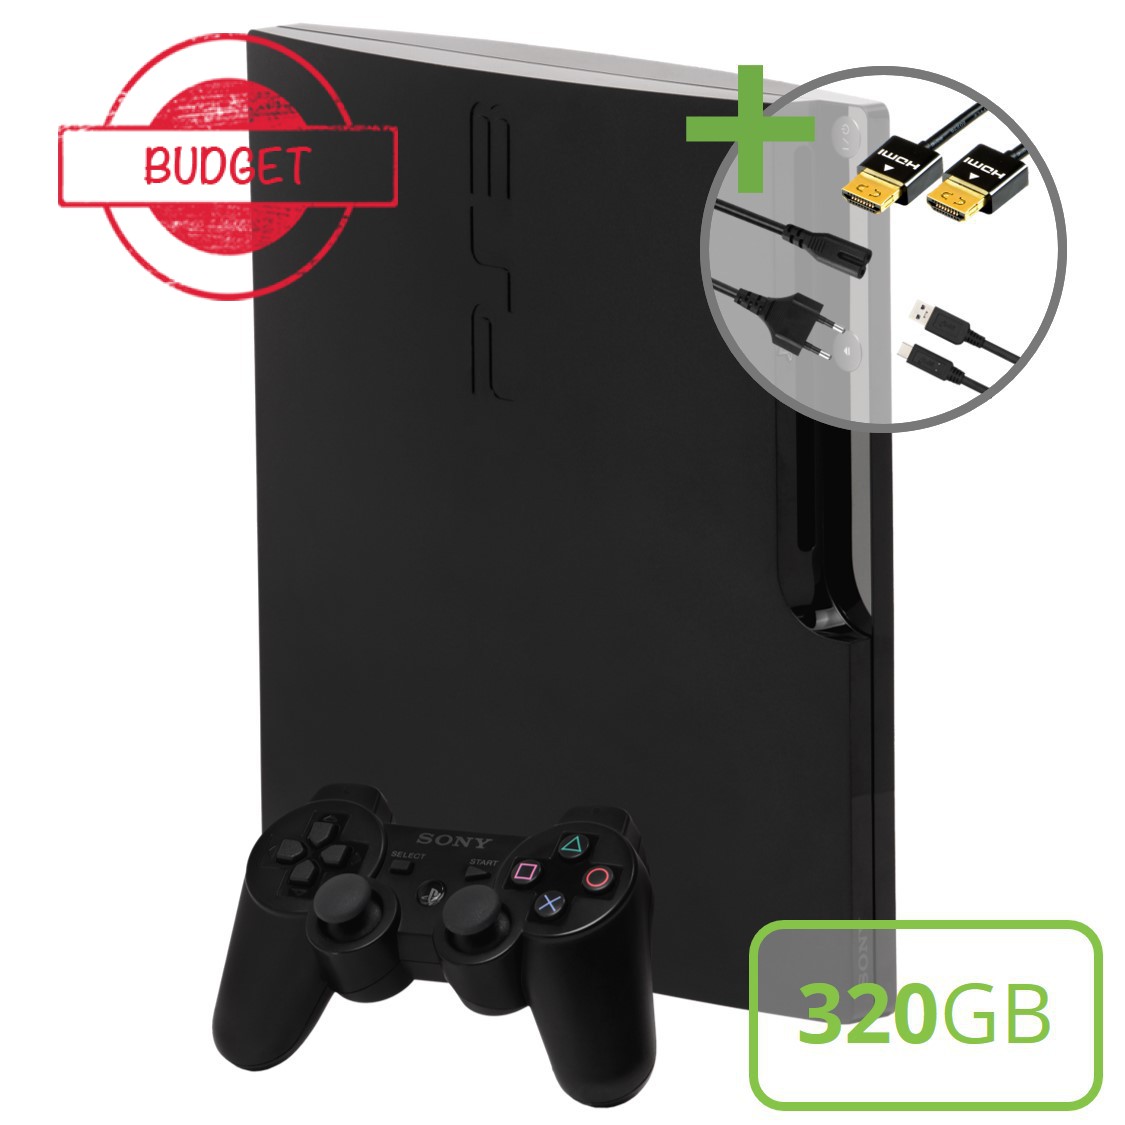 Sony PlayStation 3 Slim (320GB) Starter Pack - DualShock Edition - Budget - Playstation 3 Hardware - 2